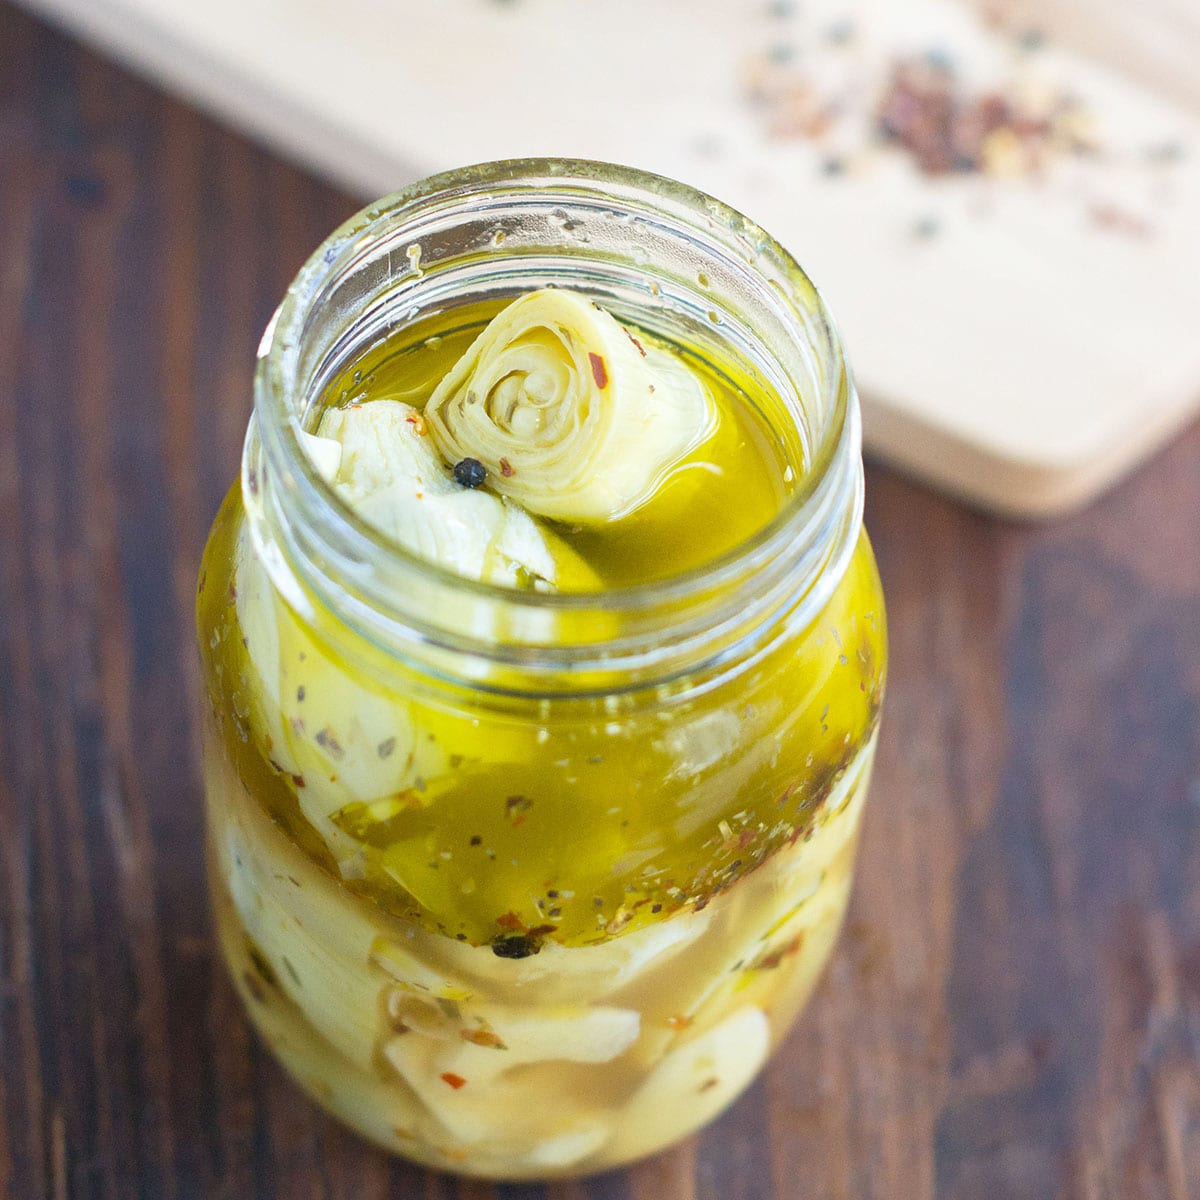 A jar with artichoke hearts in a marinade